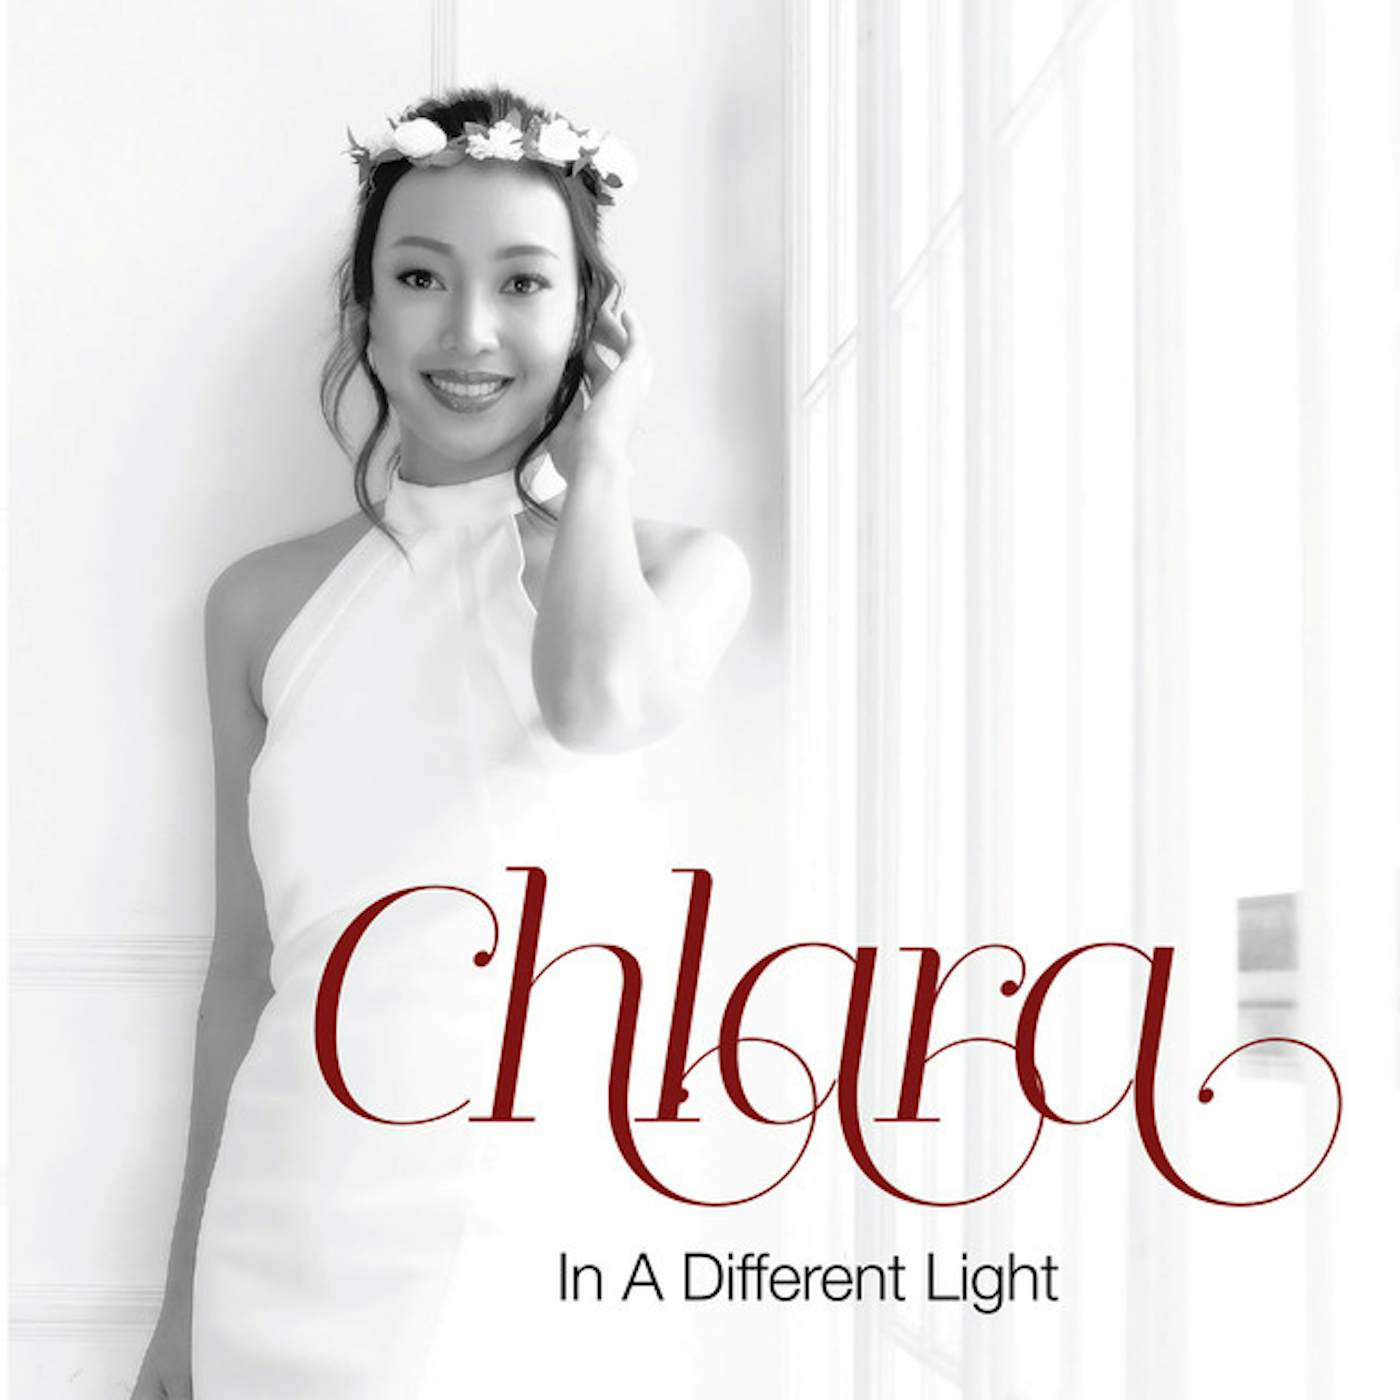 Chlara In A Different Light Vinyl Record